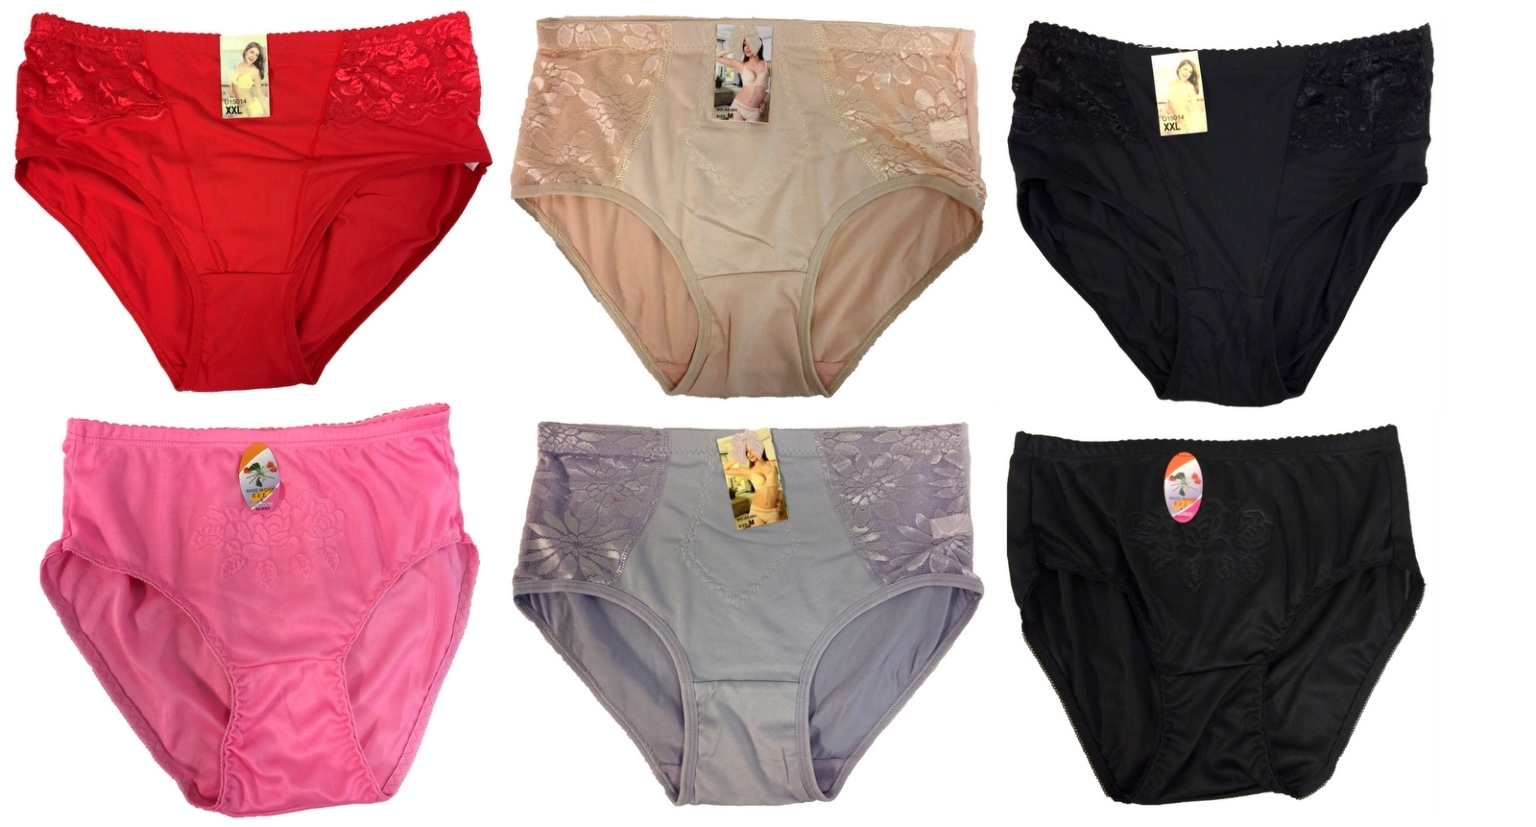 https://dollardays.imgix.net/images/l102/image2/underwear10.jpg